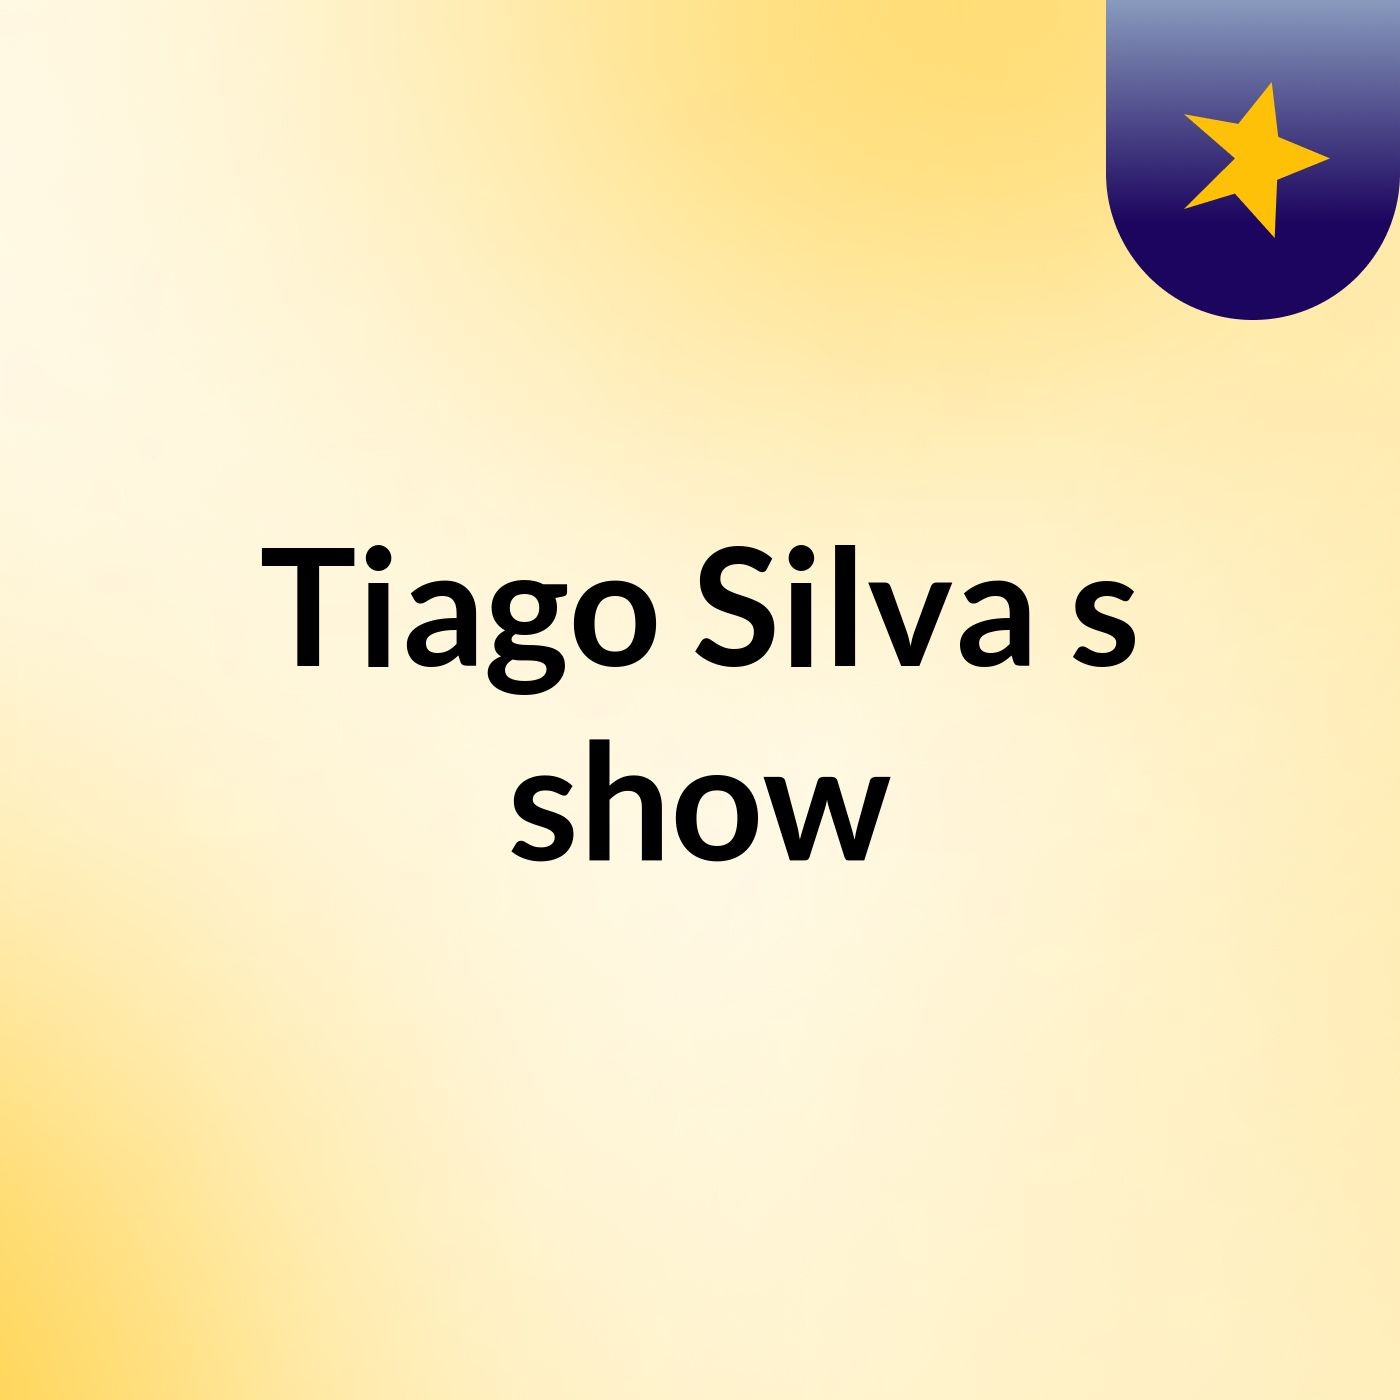 Tiago Silva's show